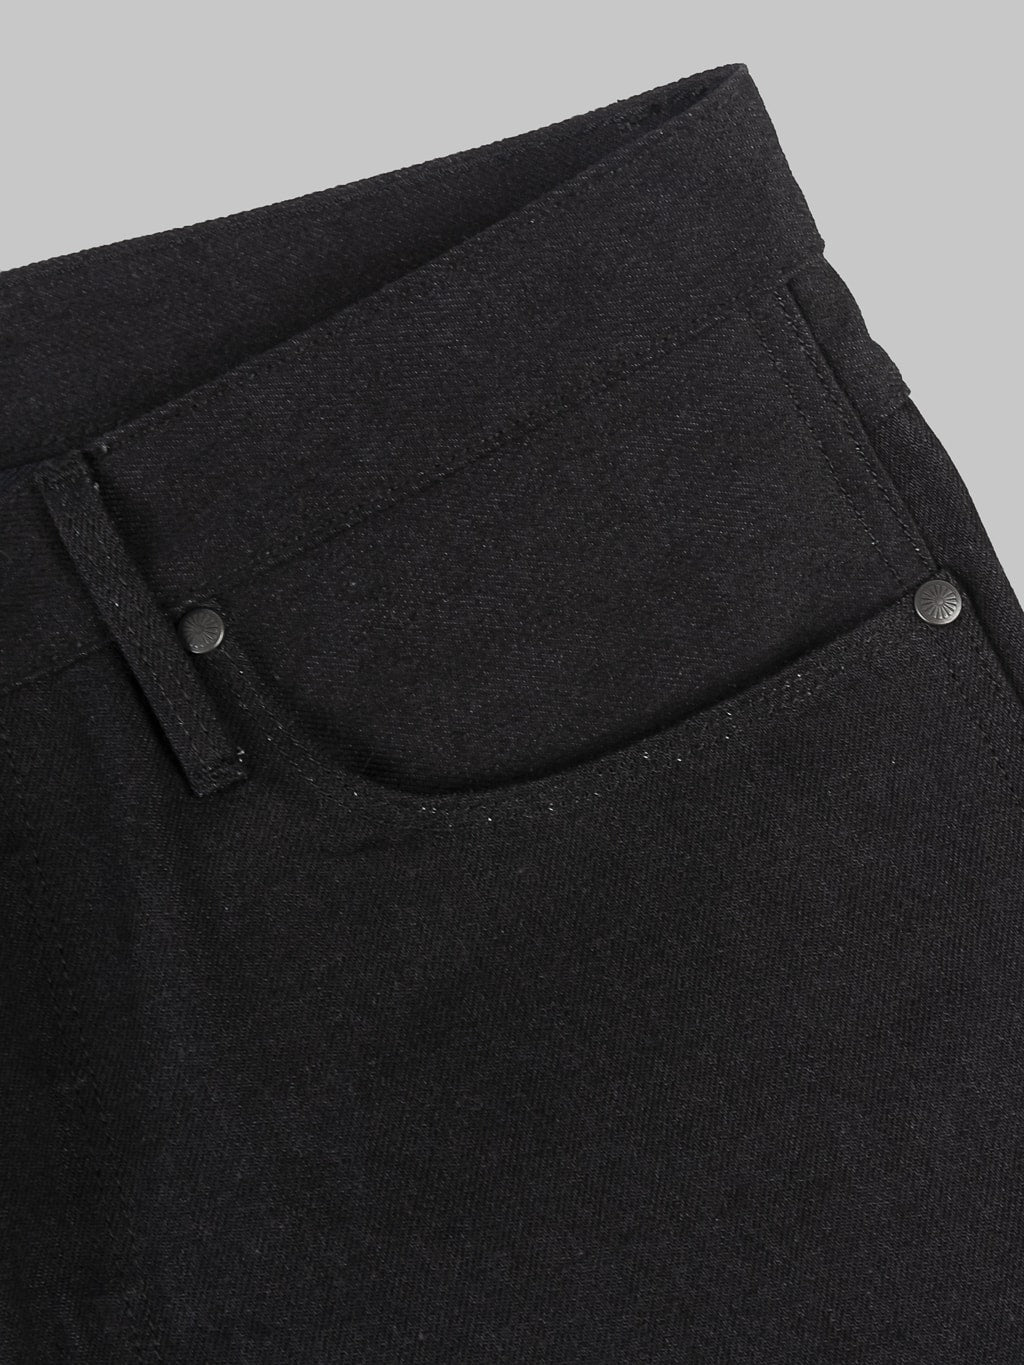 Freenote Cloth Rios Black Grey Japanese Denim Slim Straight Jeans pocket